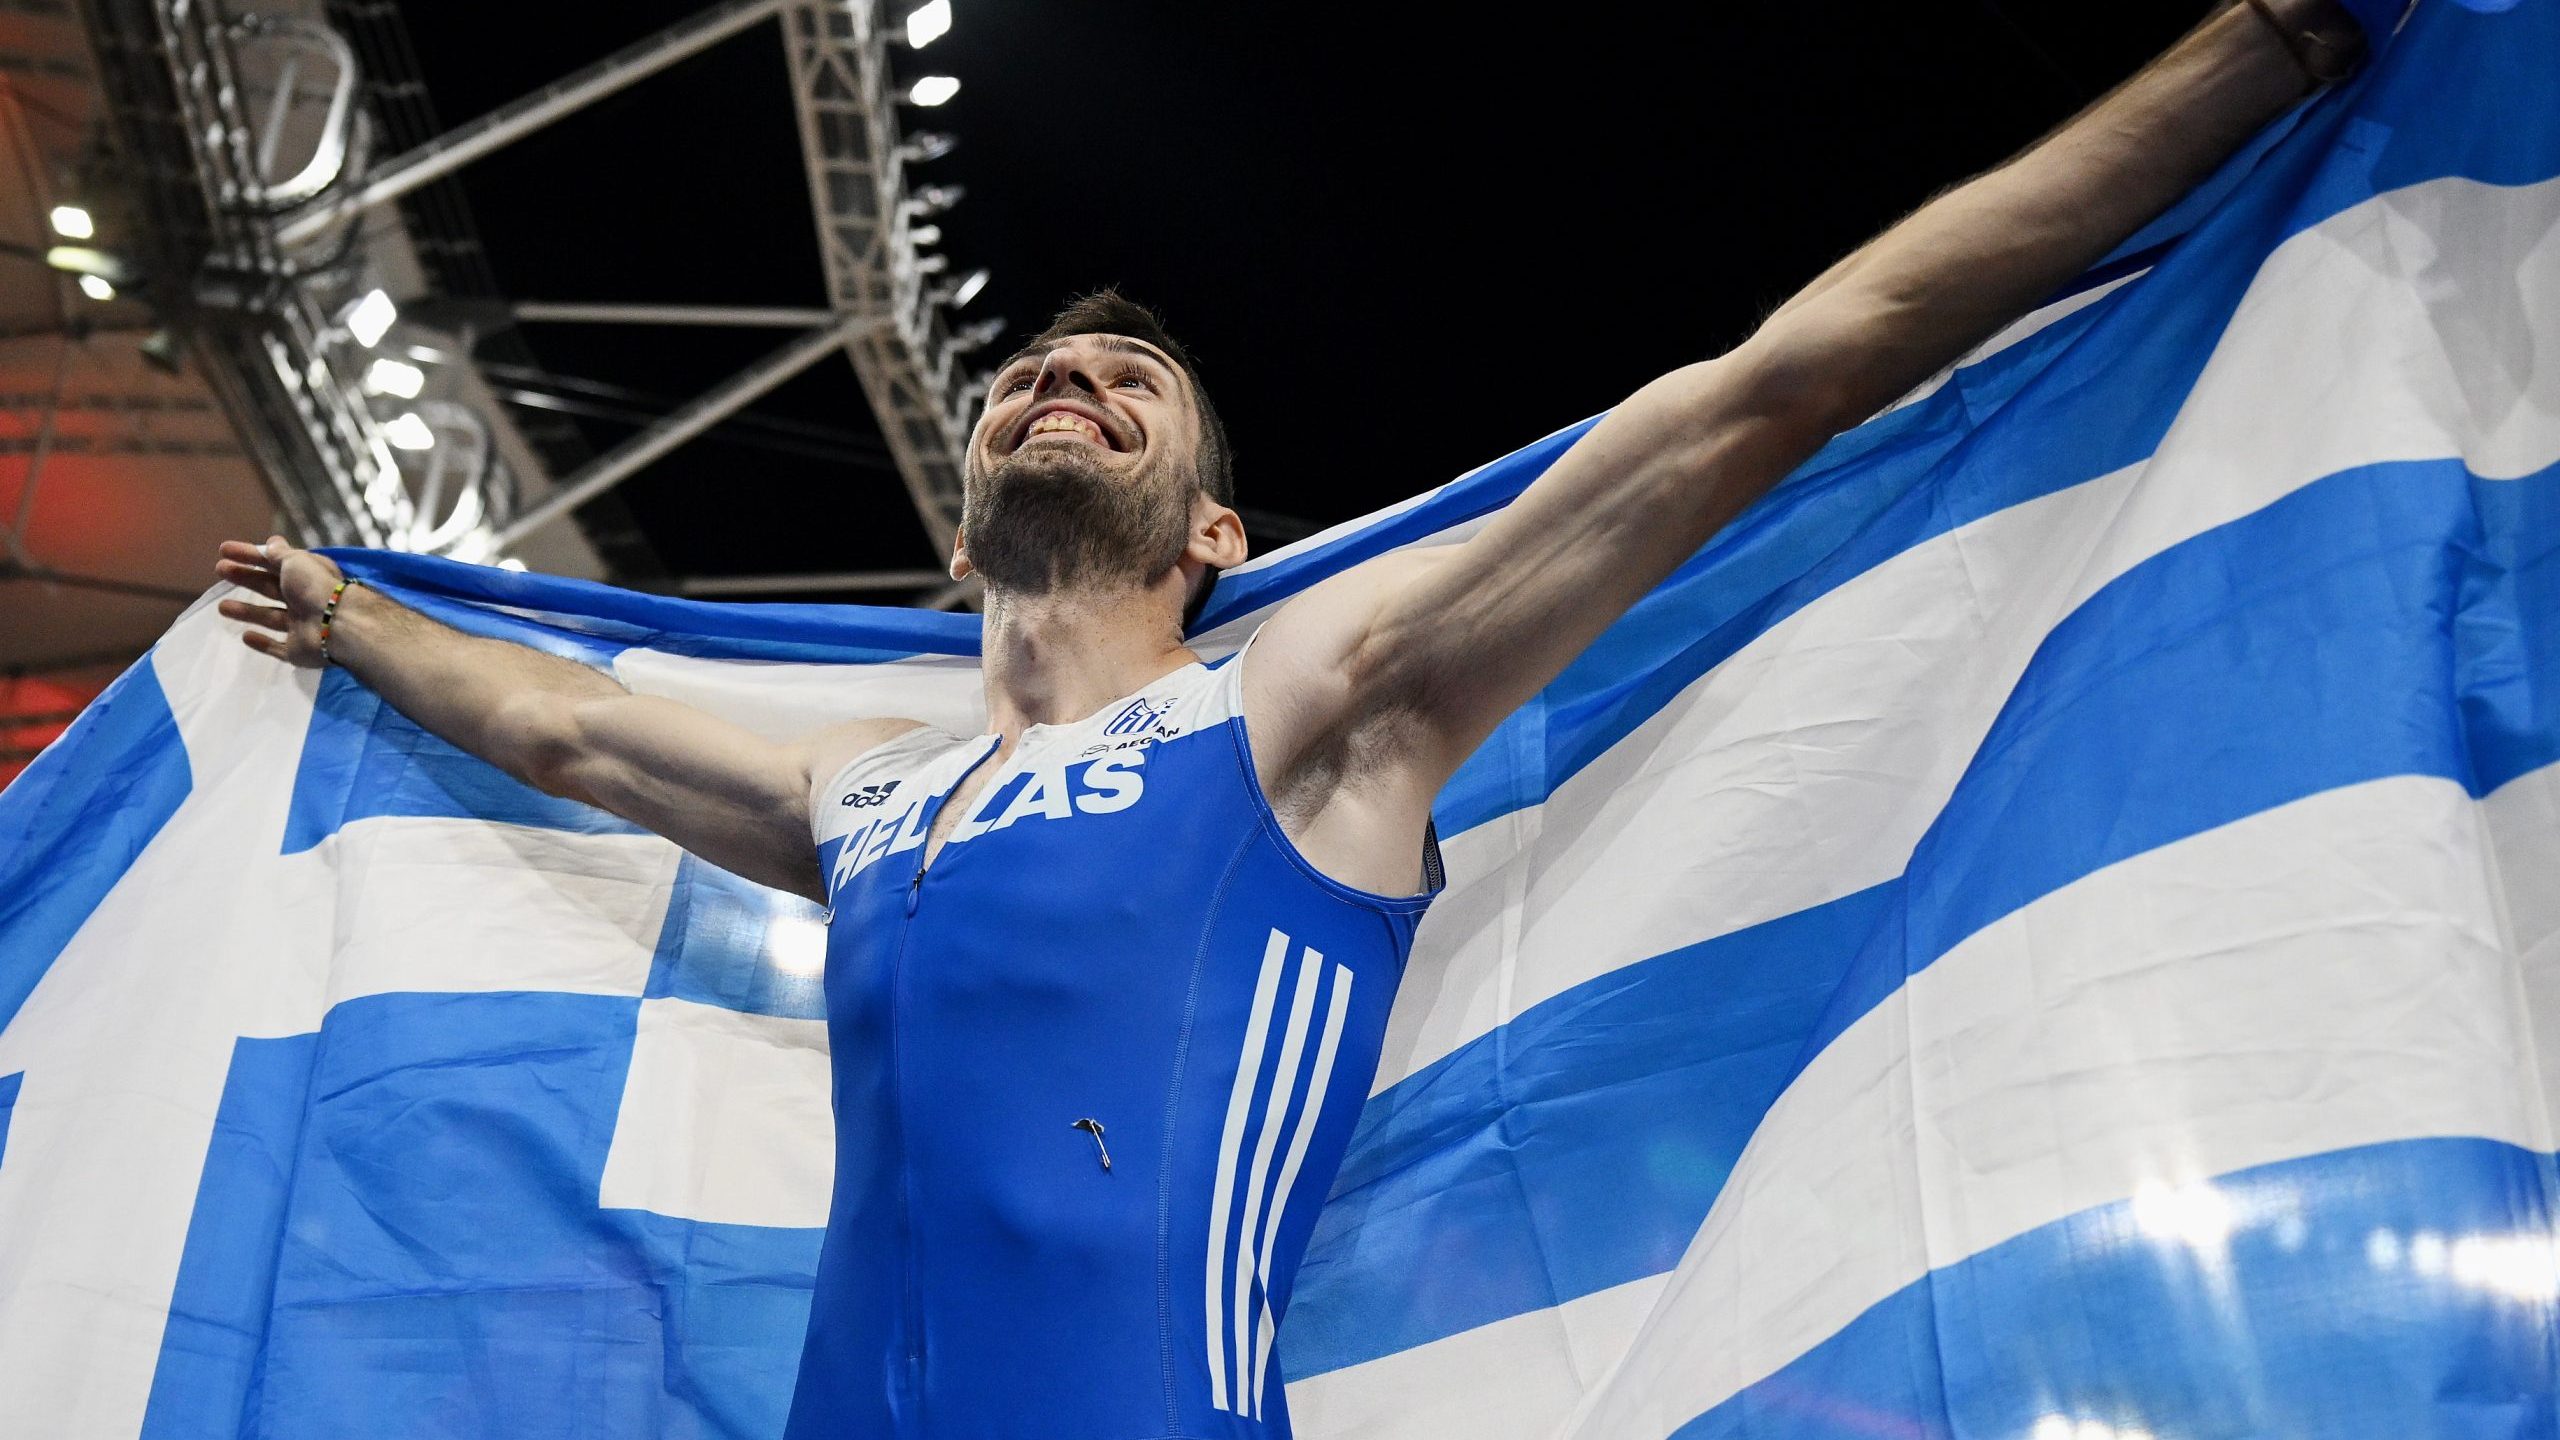 Greece’s Miltiadis Tentoglou strives for solid start to long jump season in Doha